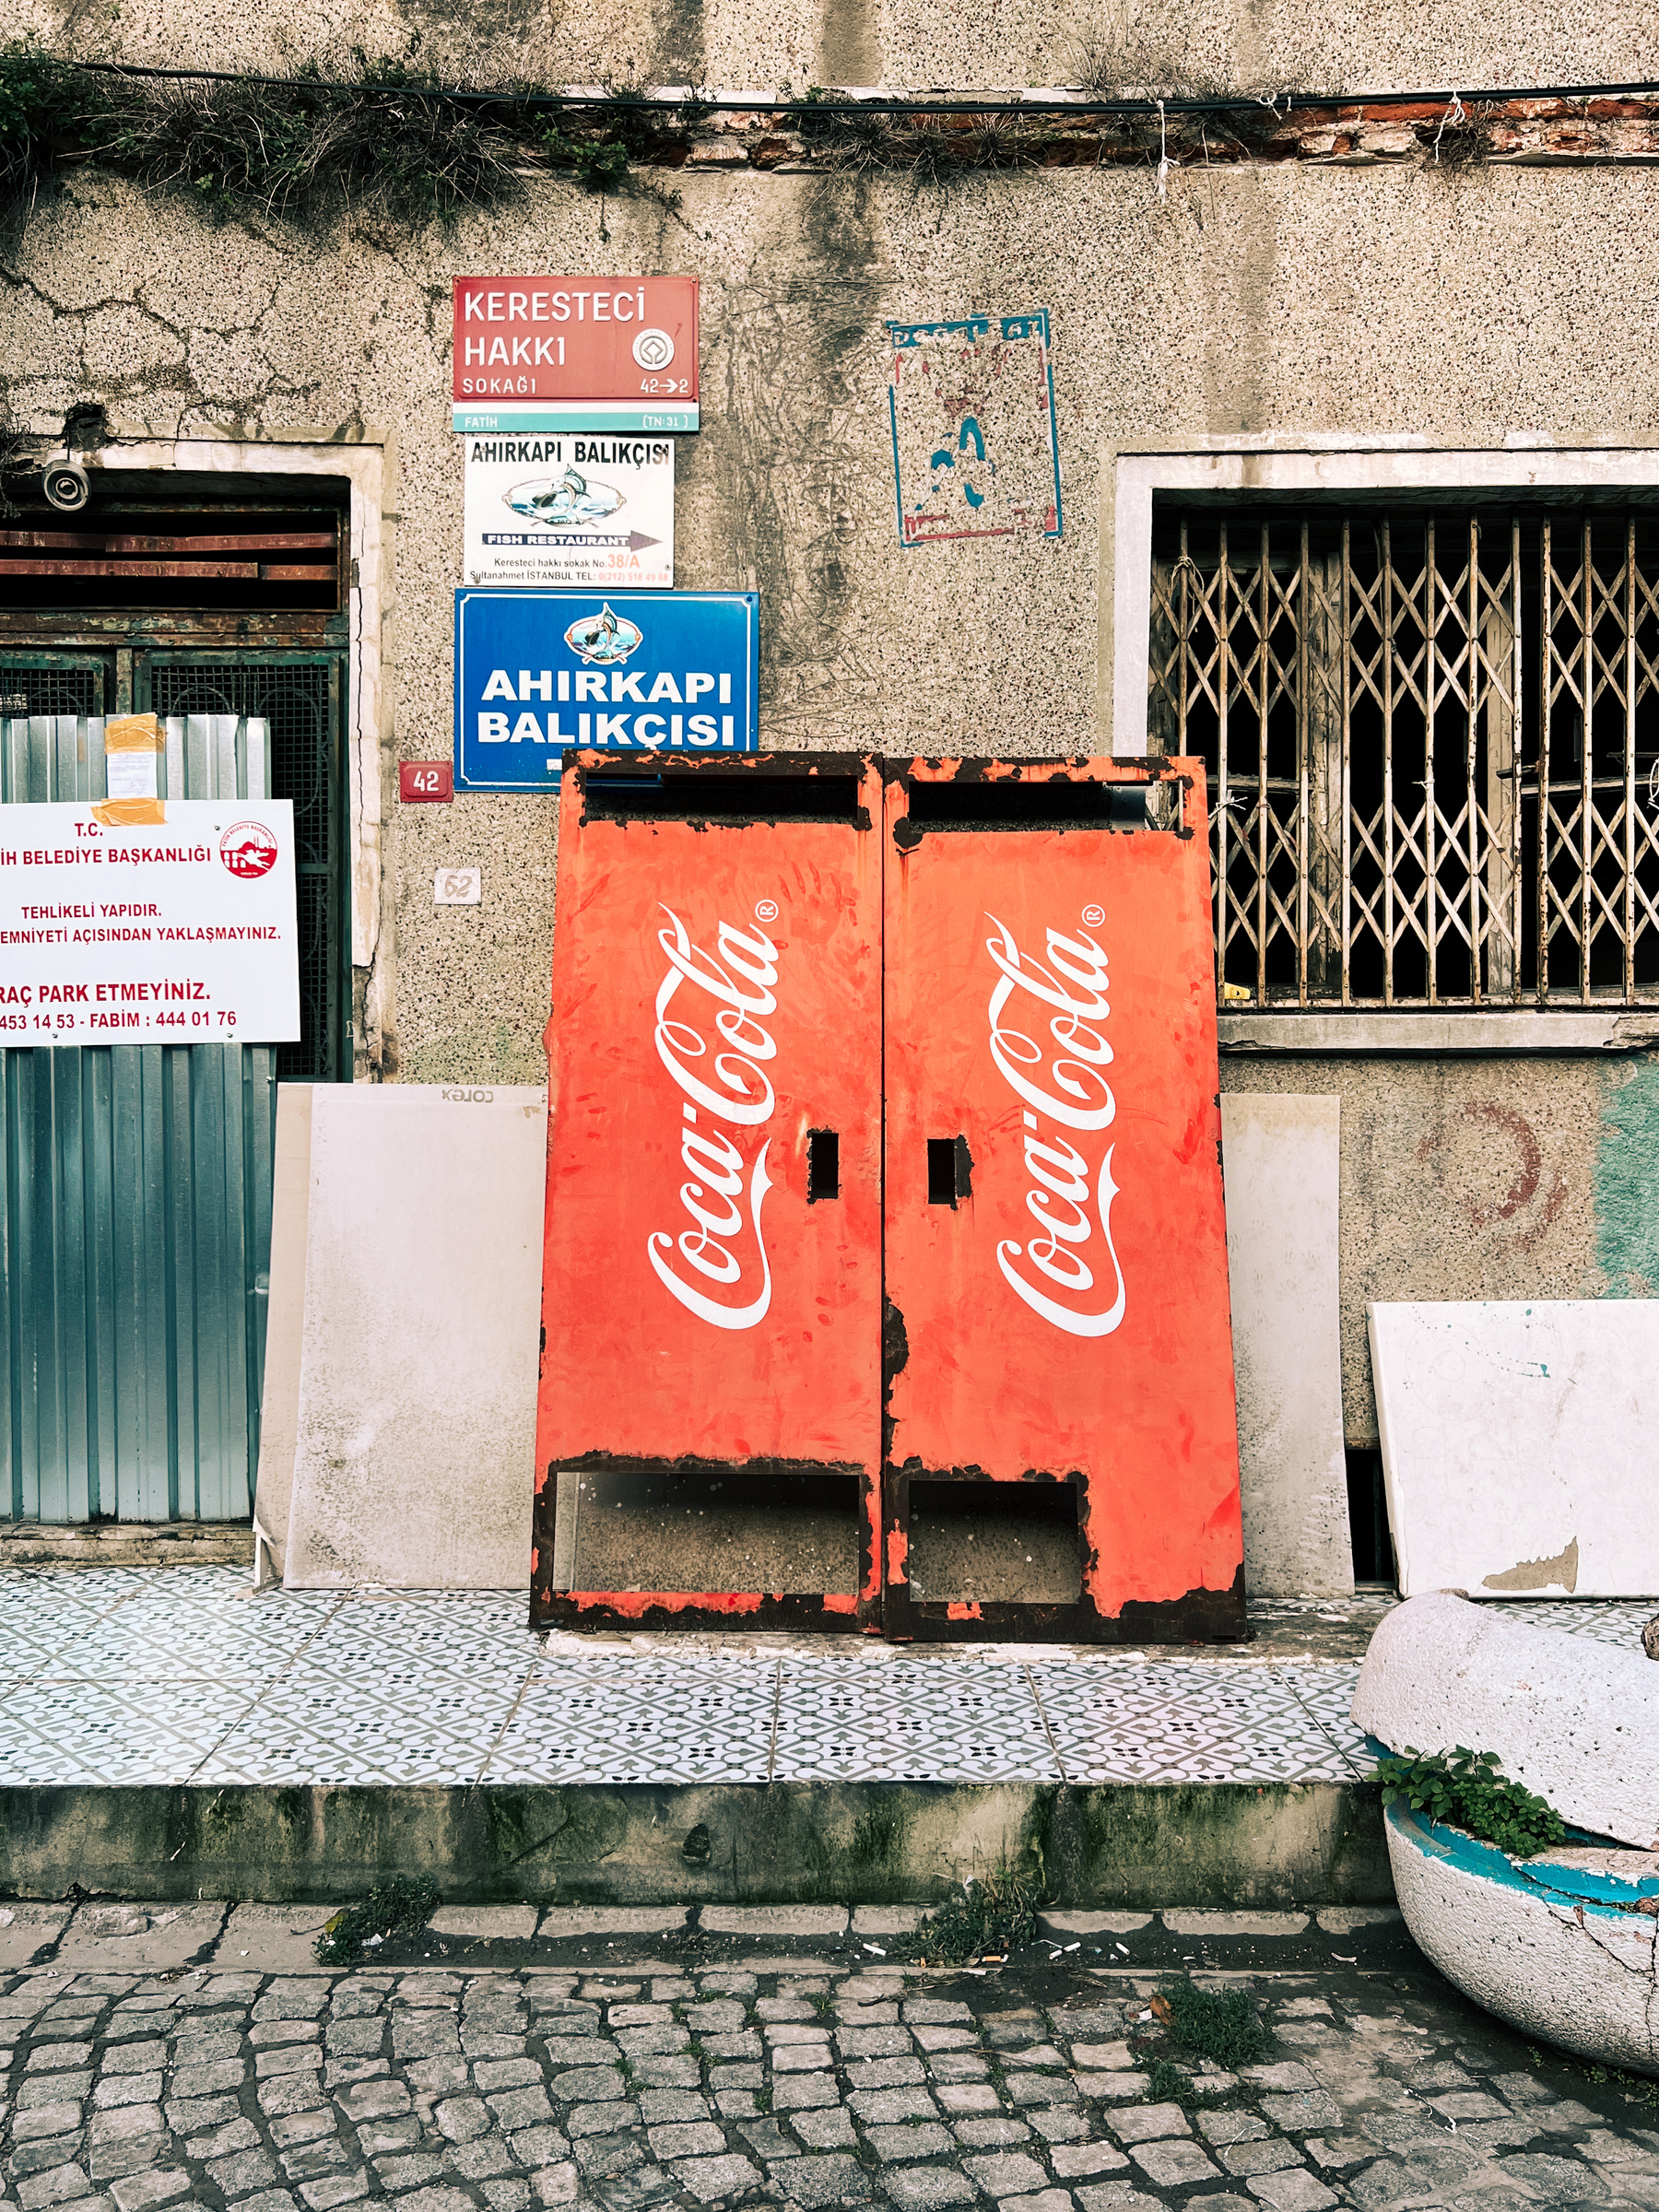 Old coca-cola doors, abandoned. 